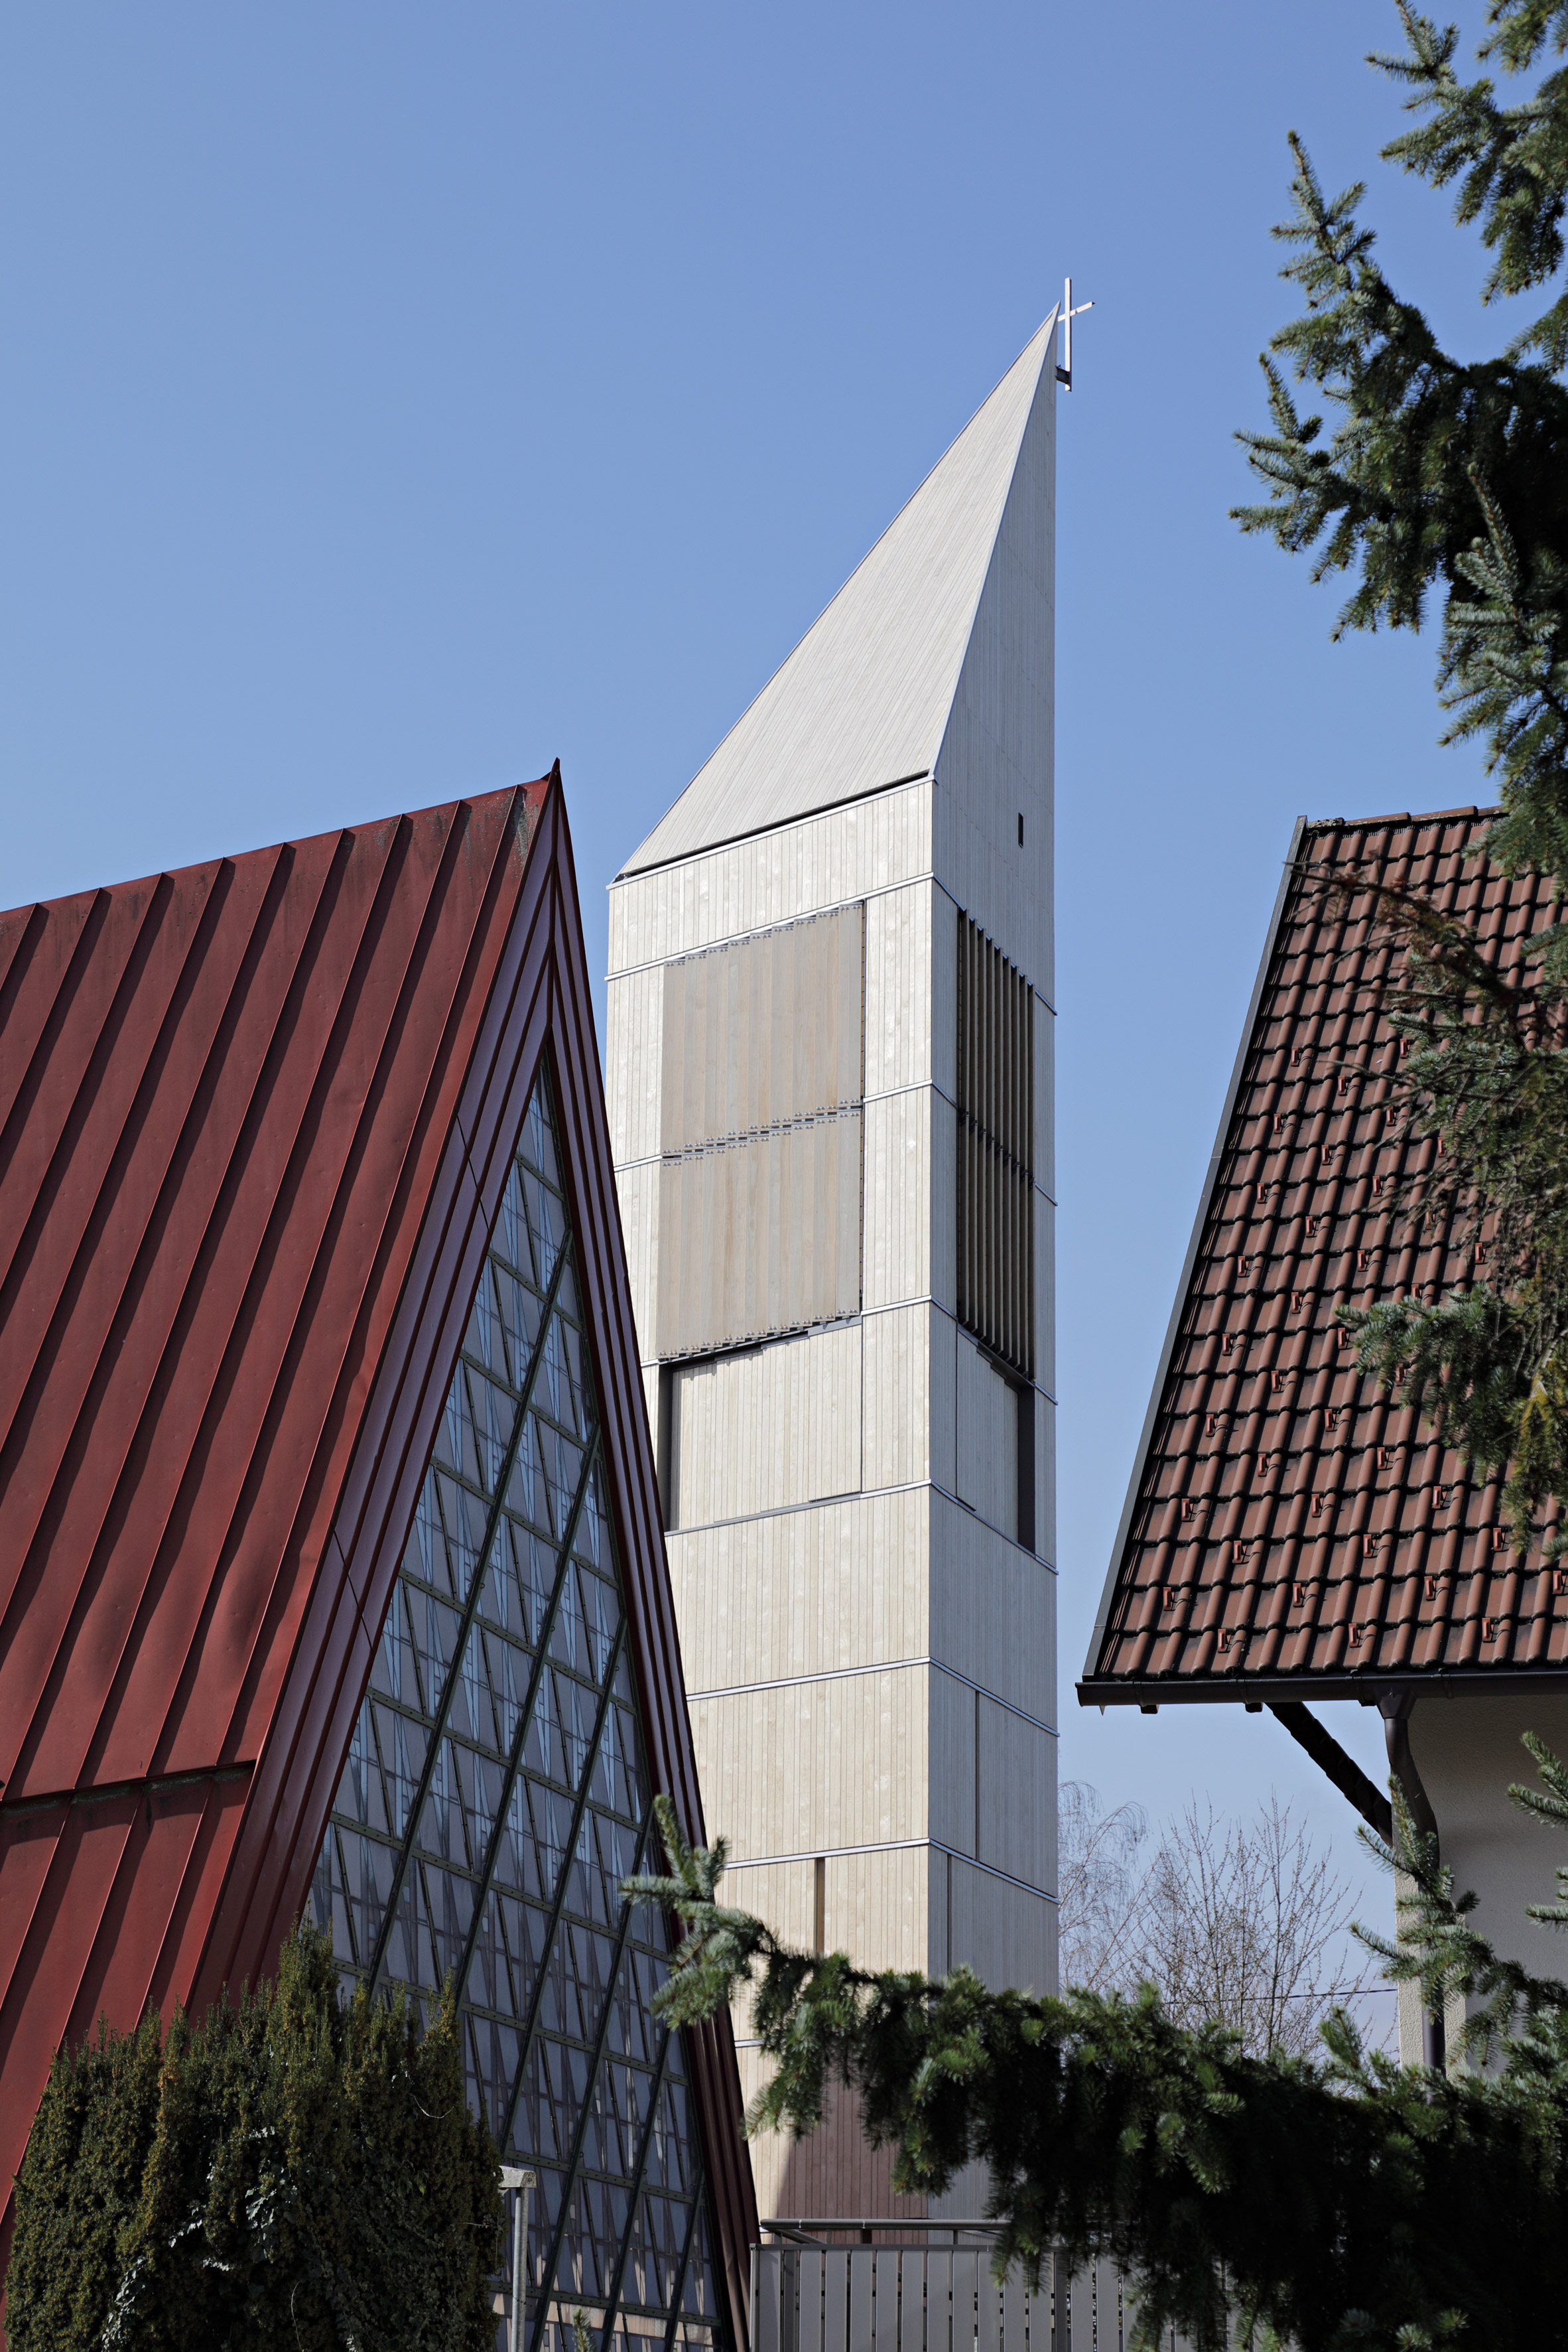 St Georg church tower in Bleibach, Black Forest by Architektur3